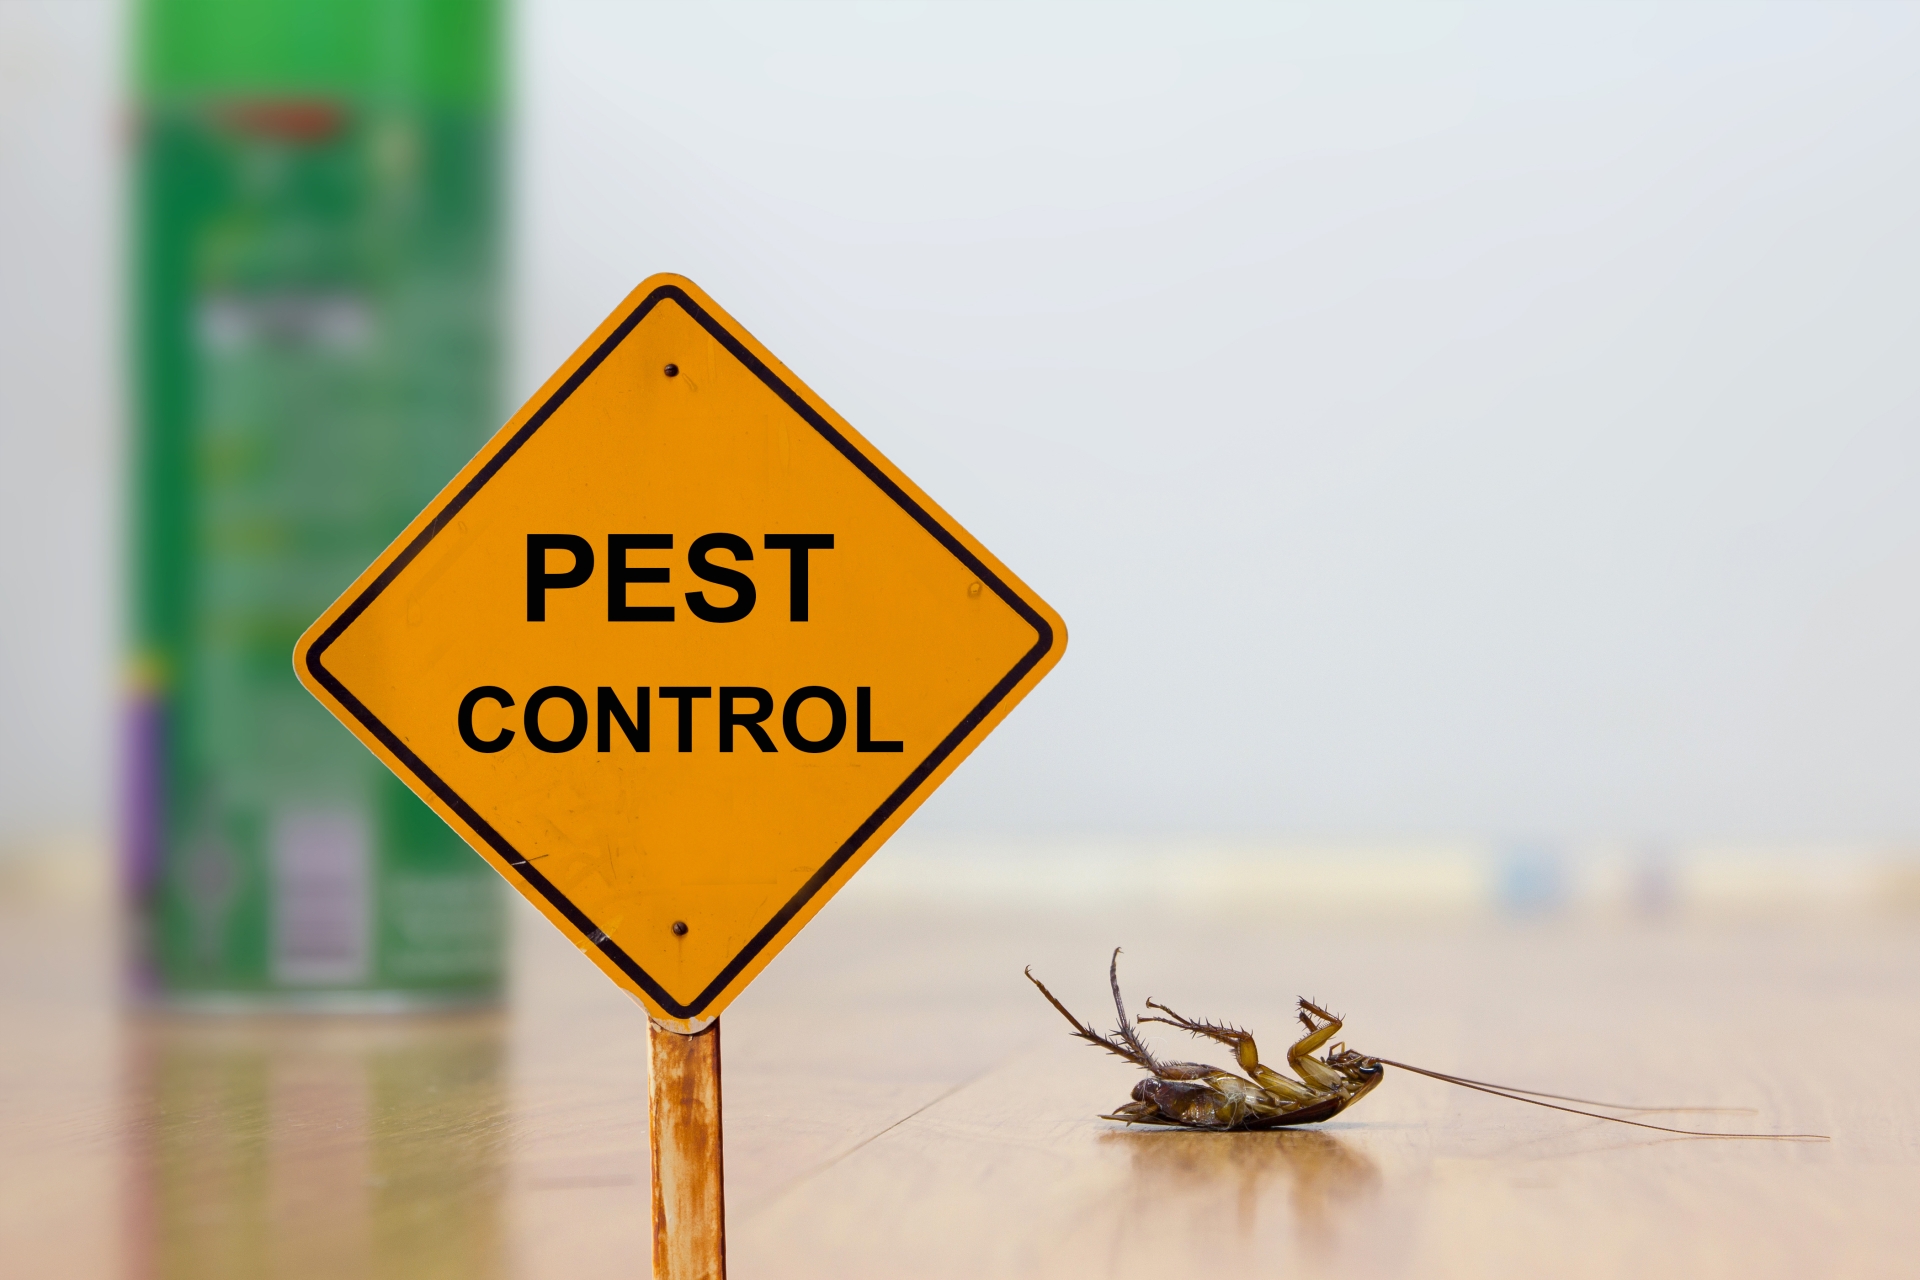 24 Hour Pest Control, Pest Control in Whitechapel, E1. Call Now 020 8166 9746